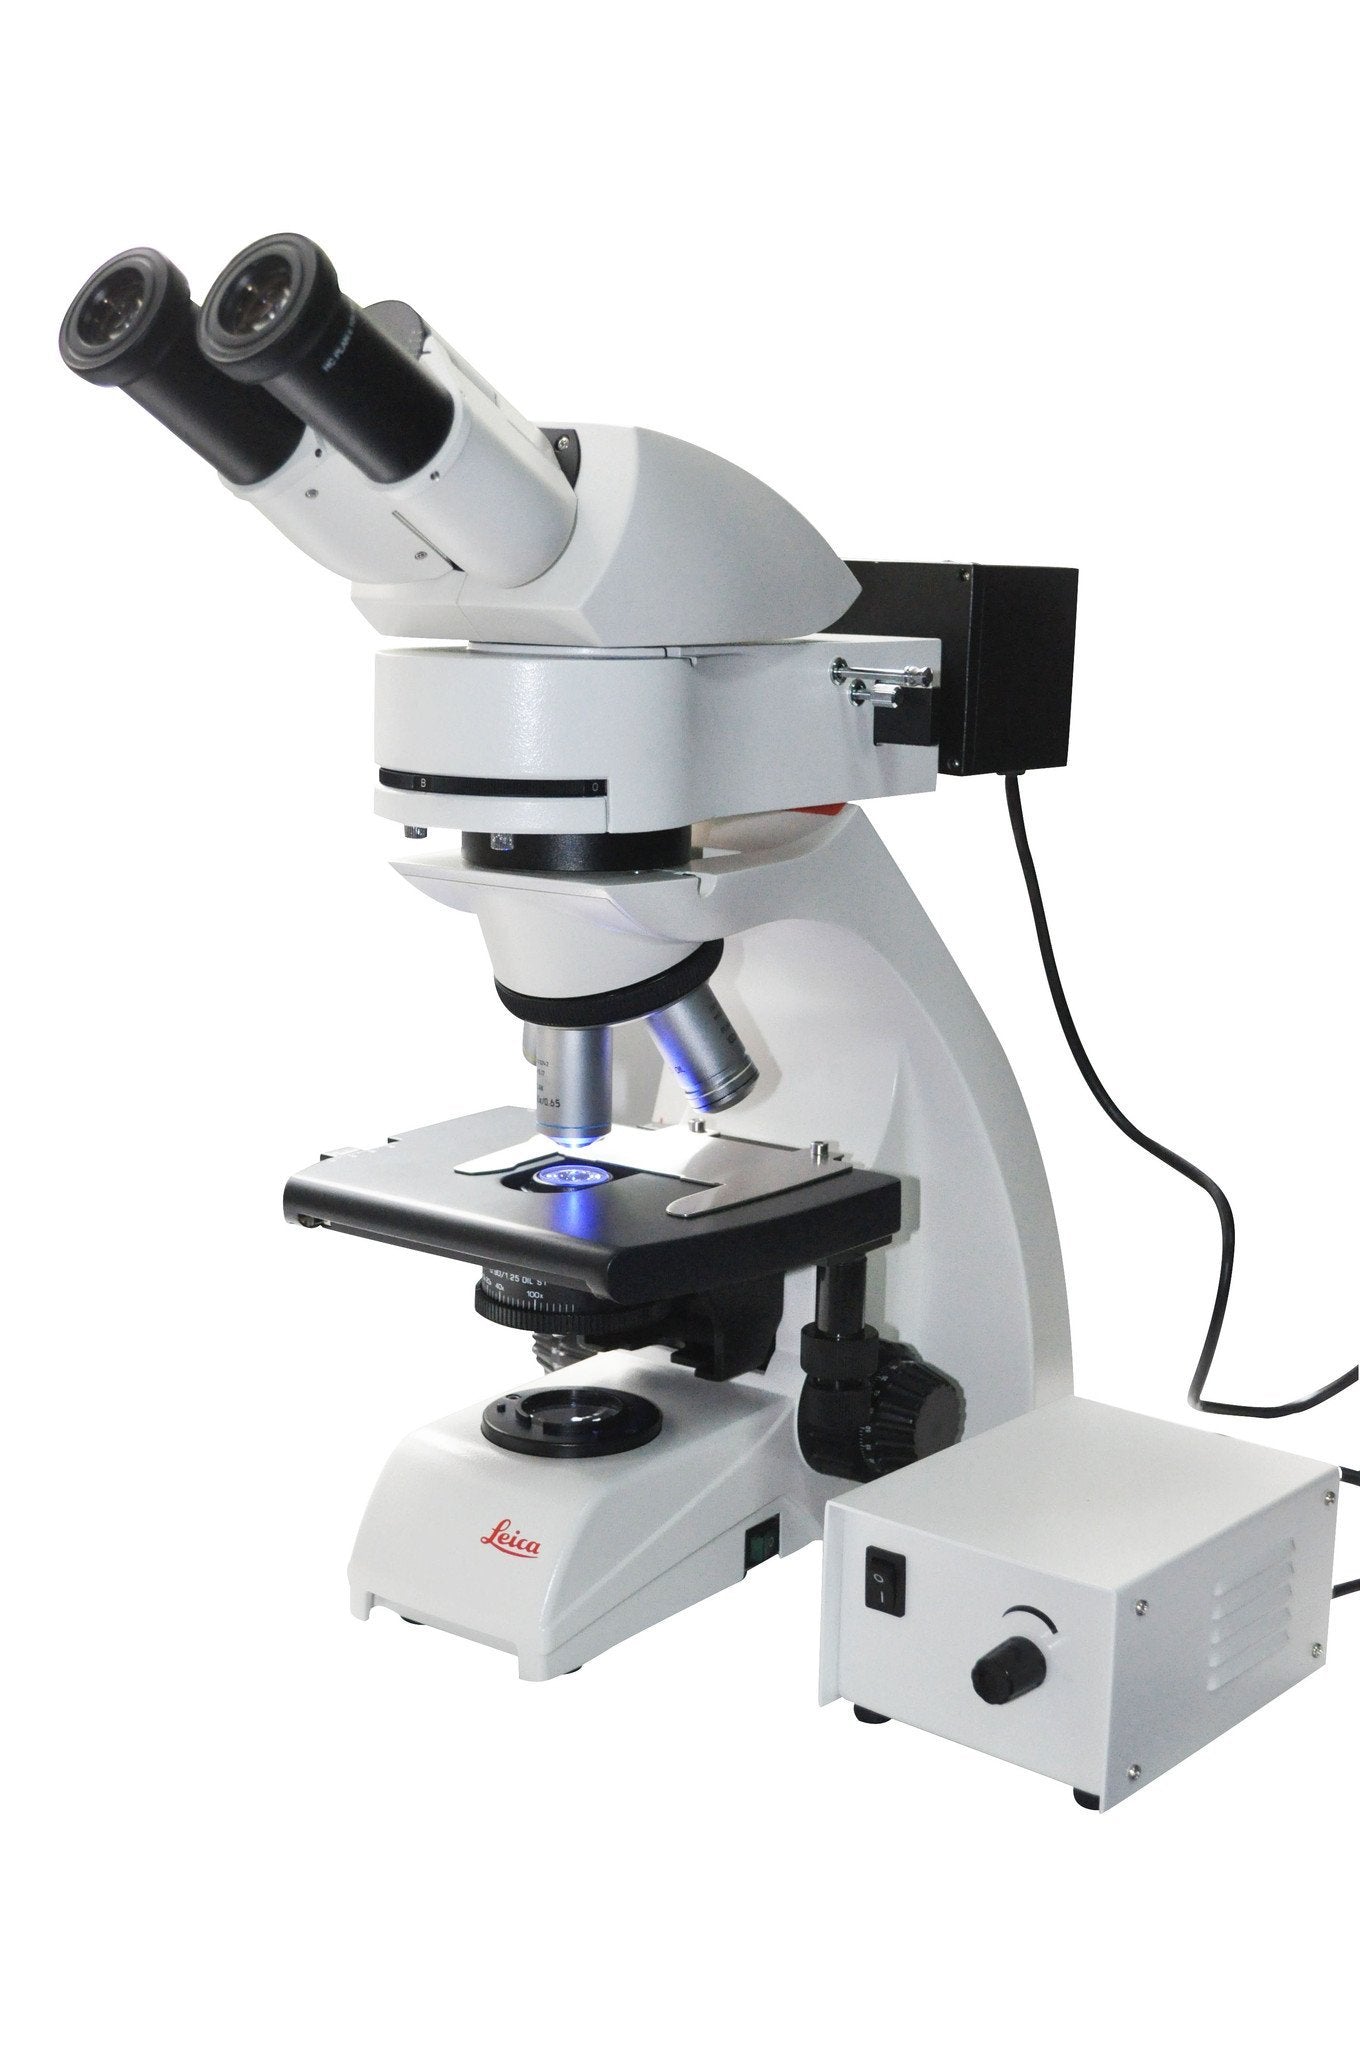 Leica DM500 Fluorescence Microscope